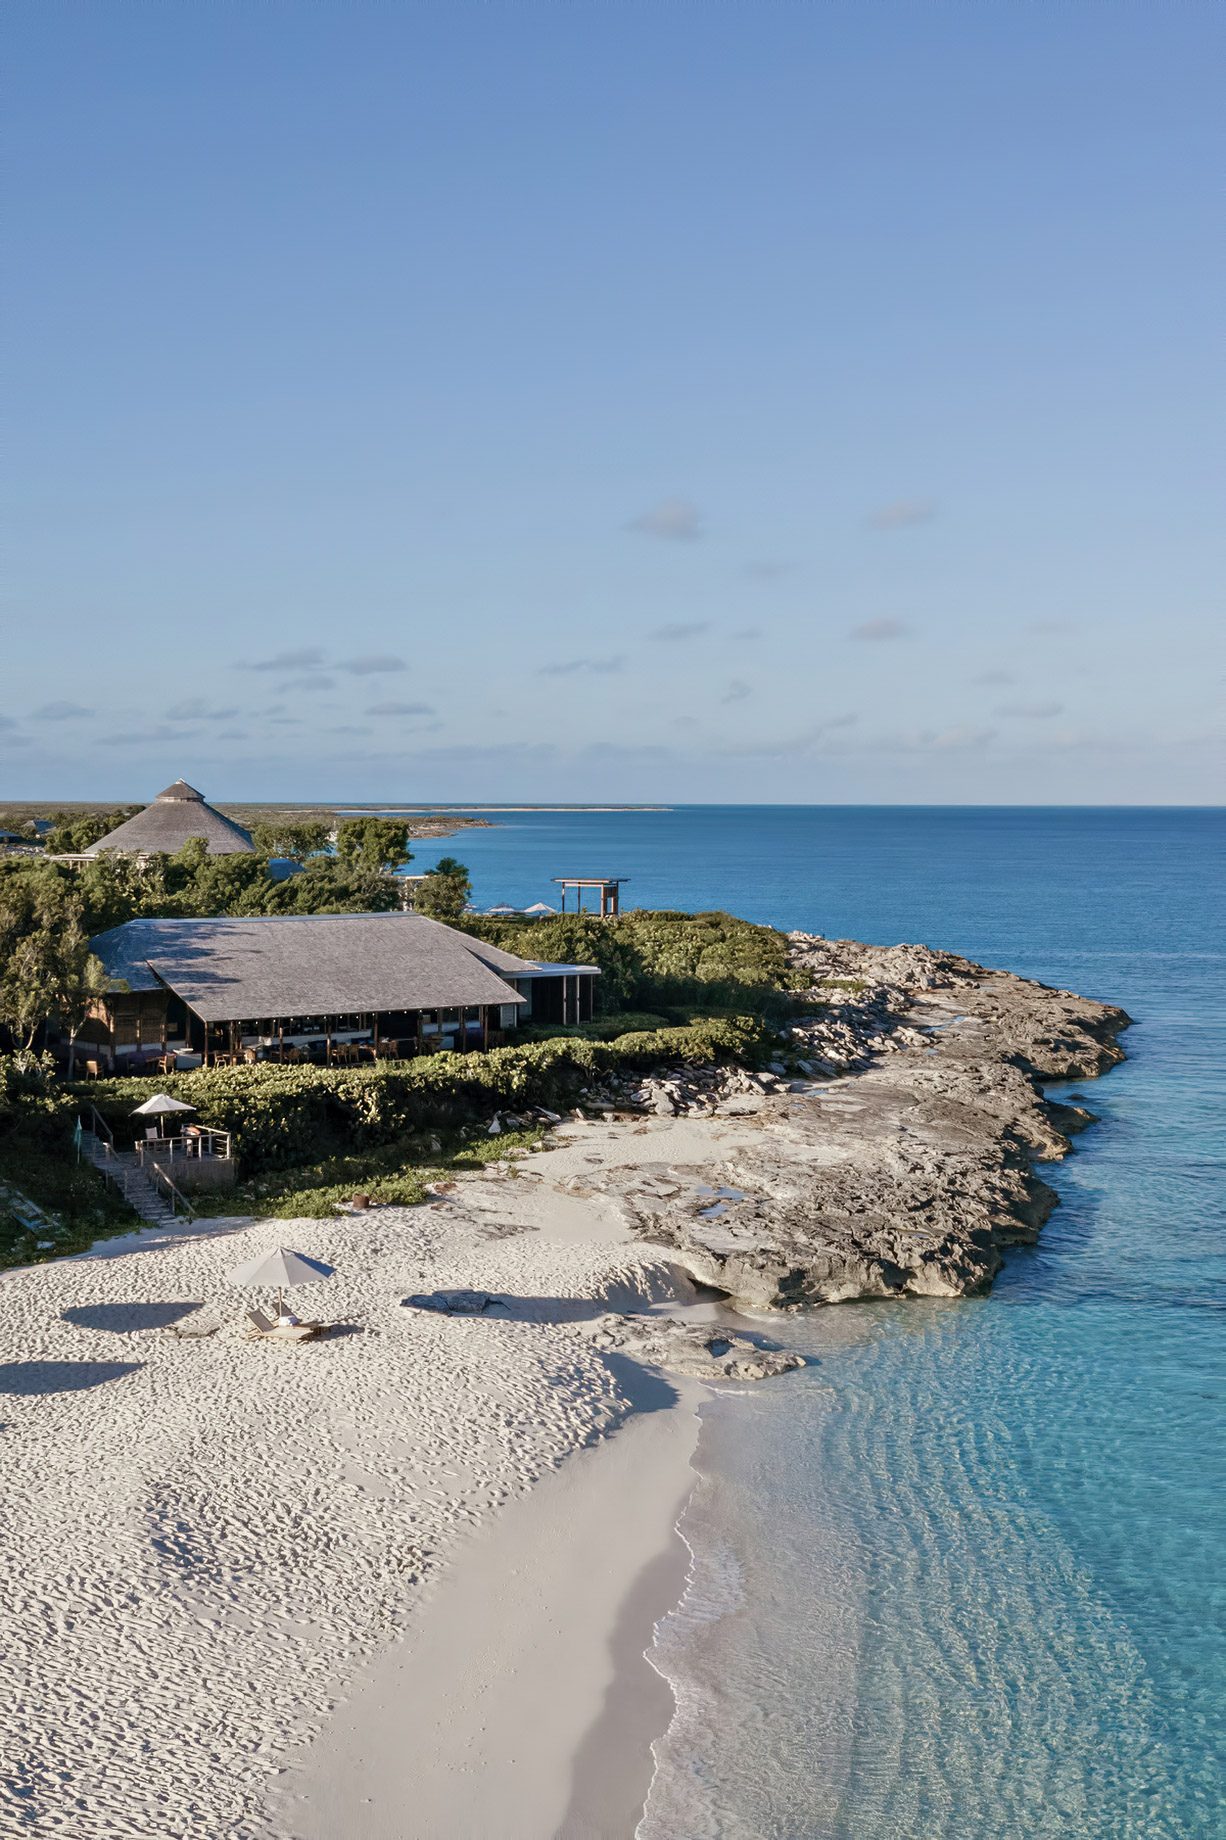 Amanyara Resort - Providenciales, Turks and Caicos Islands - Beach Club Ocean View